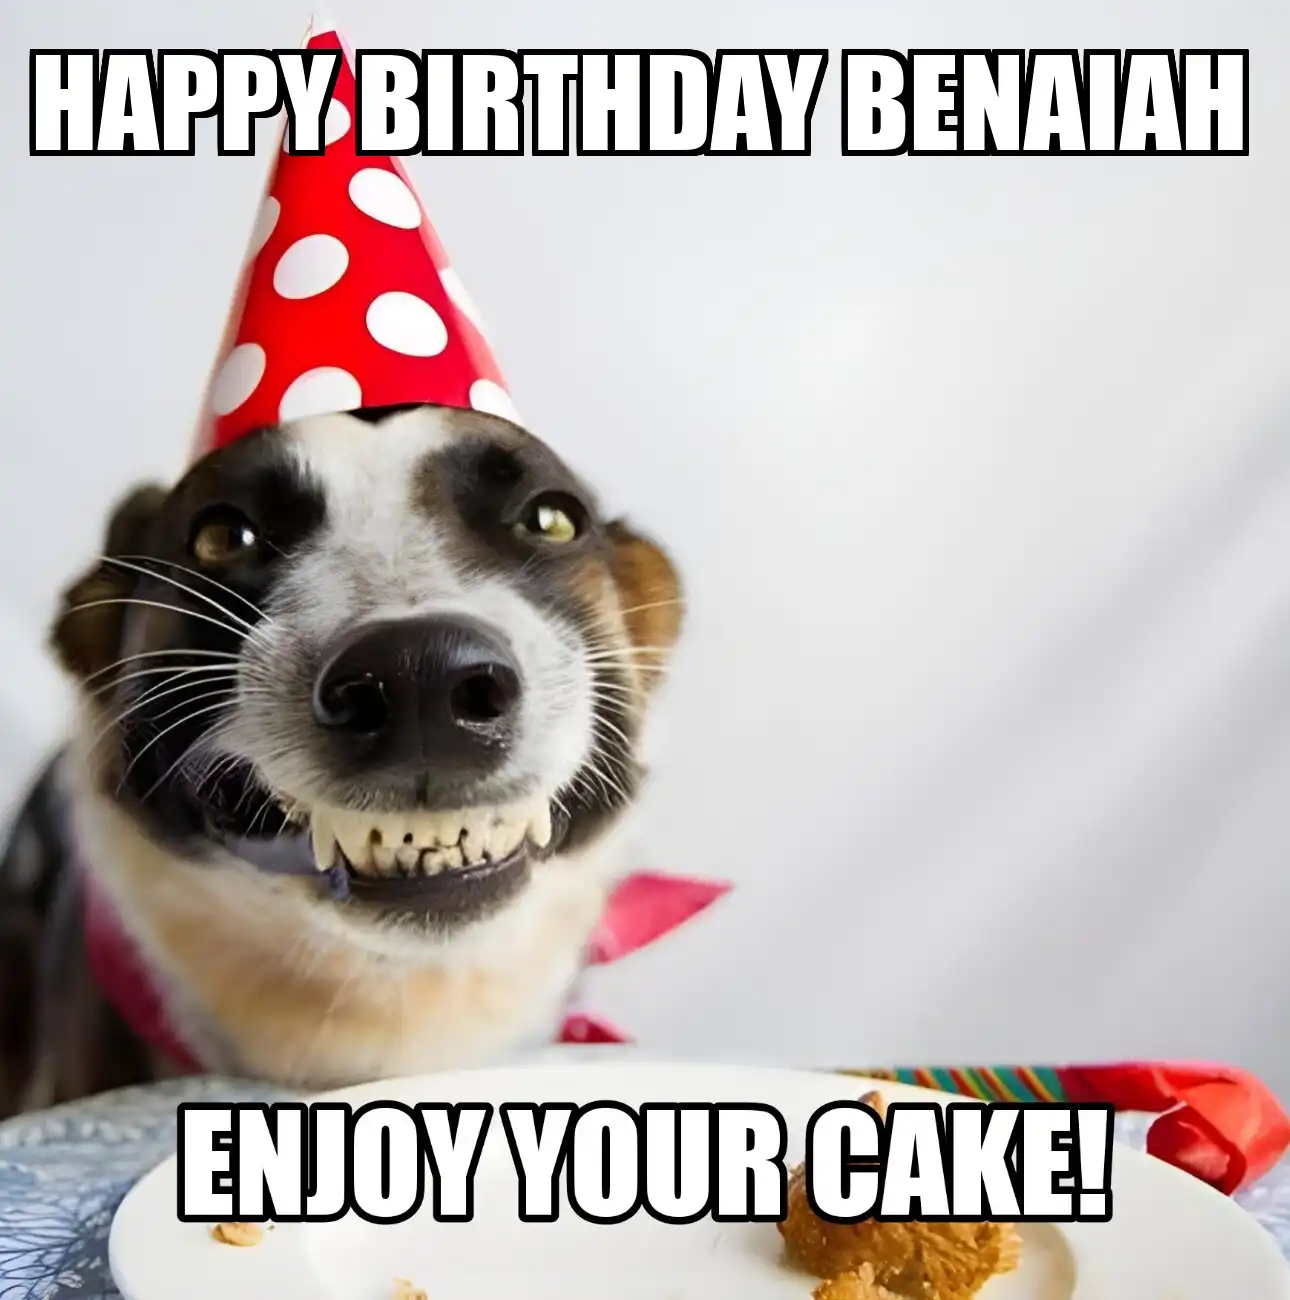 Happy Birthday Benaiah Enjoy Your Cake Dog Meme